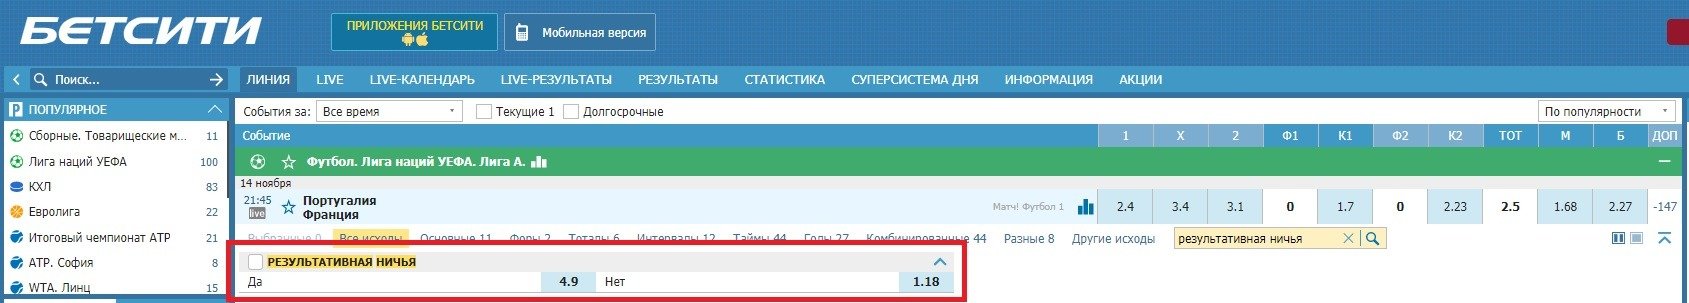 betcity ru stavki na rezultativnuyu nichyu futbol hokkej